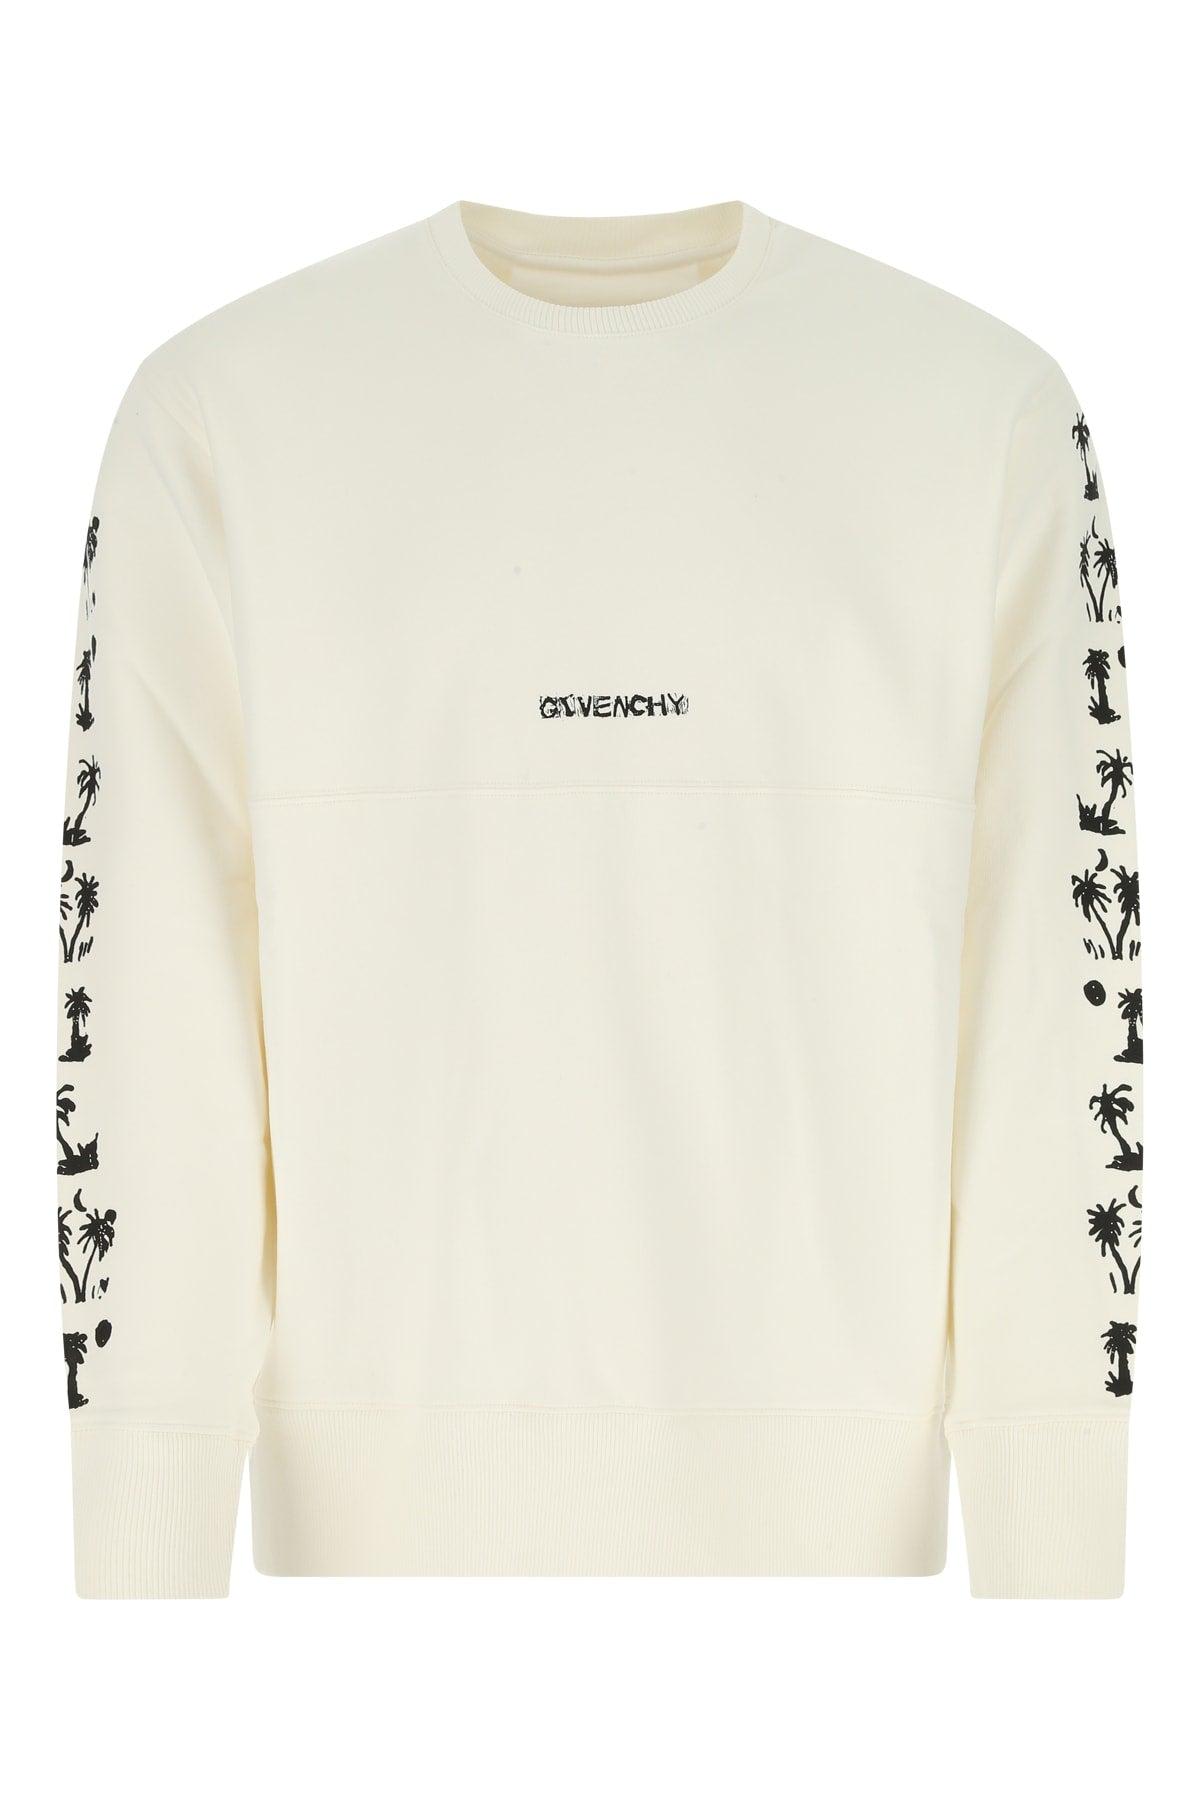 Givenchy Palm Printed Crewneck Sweatshirt